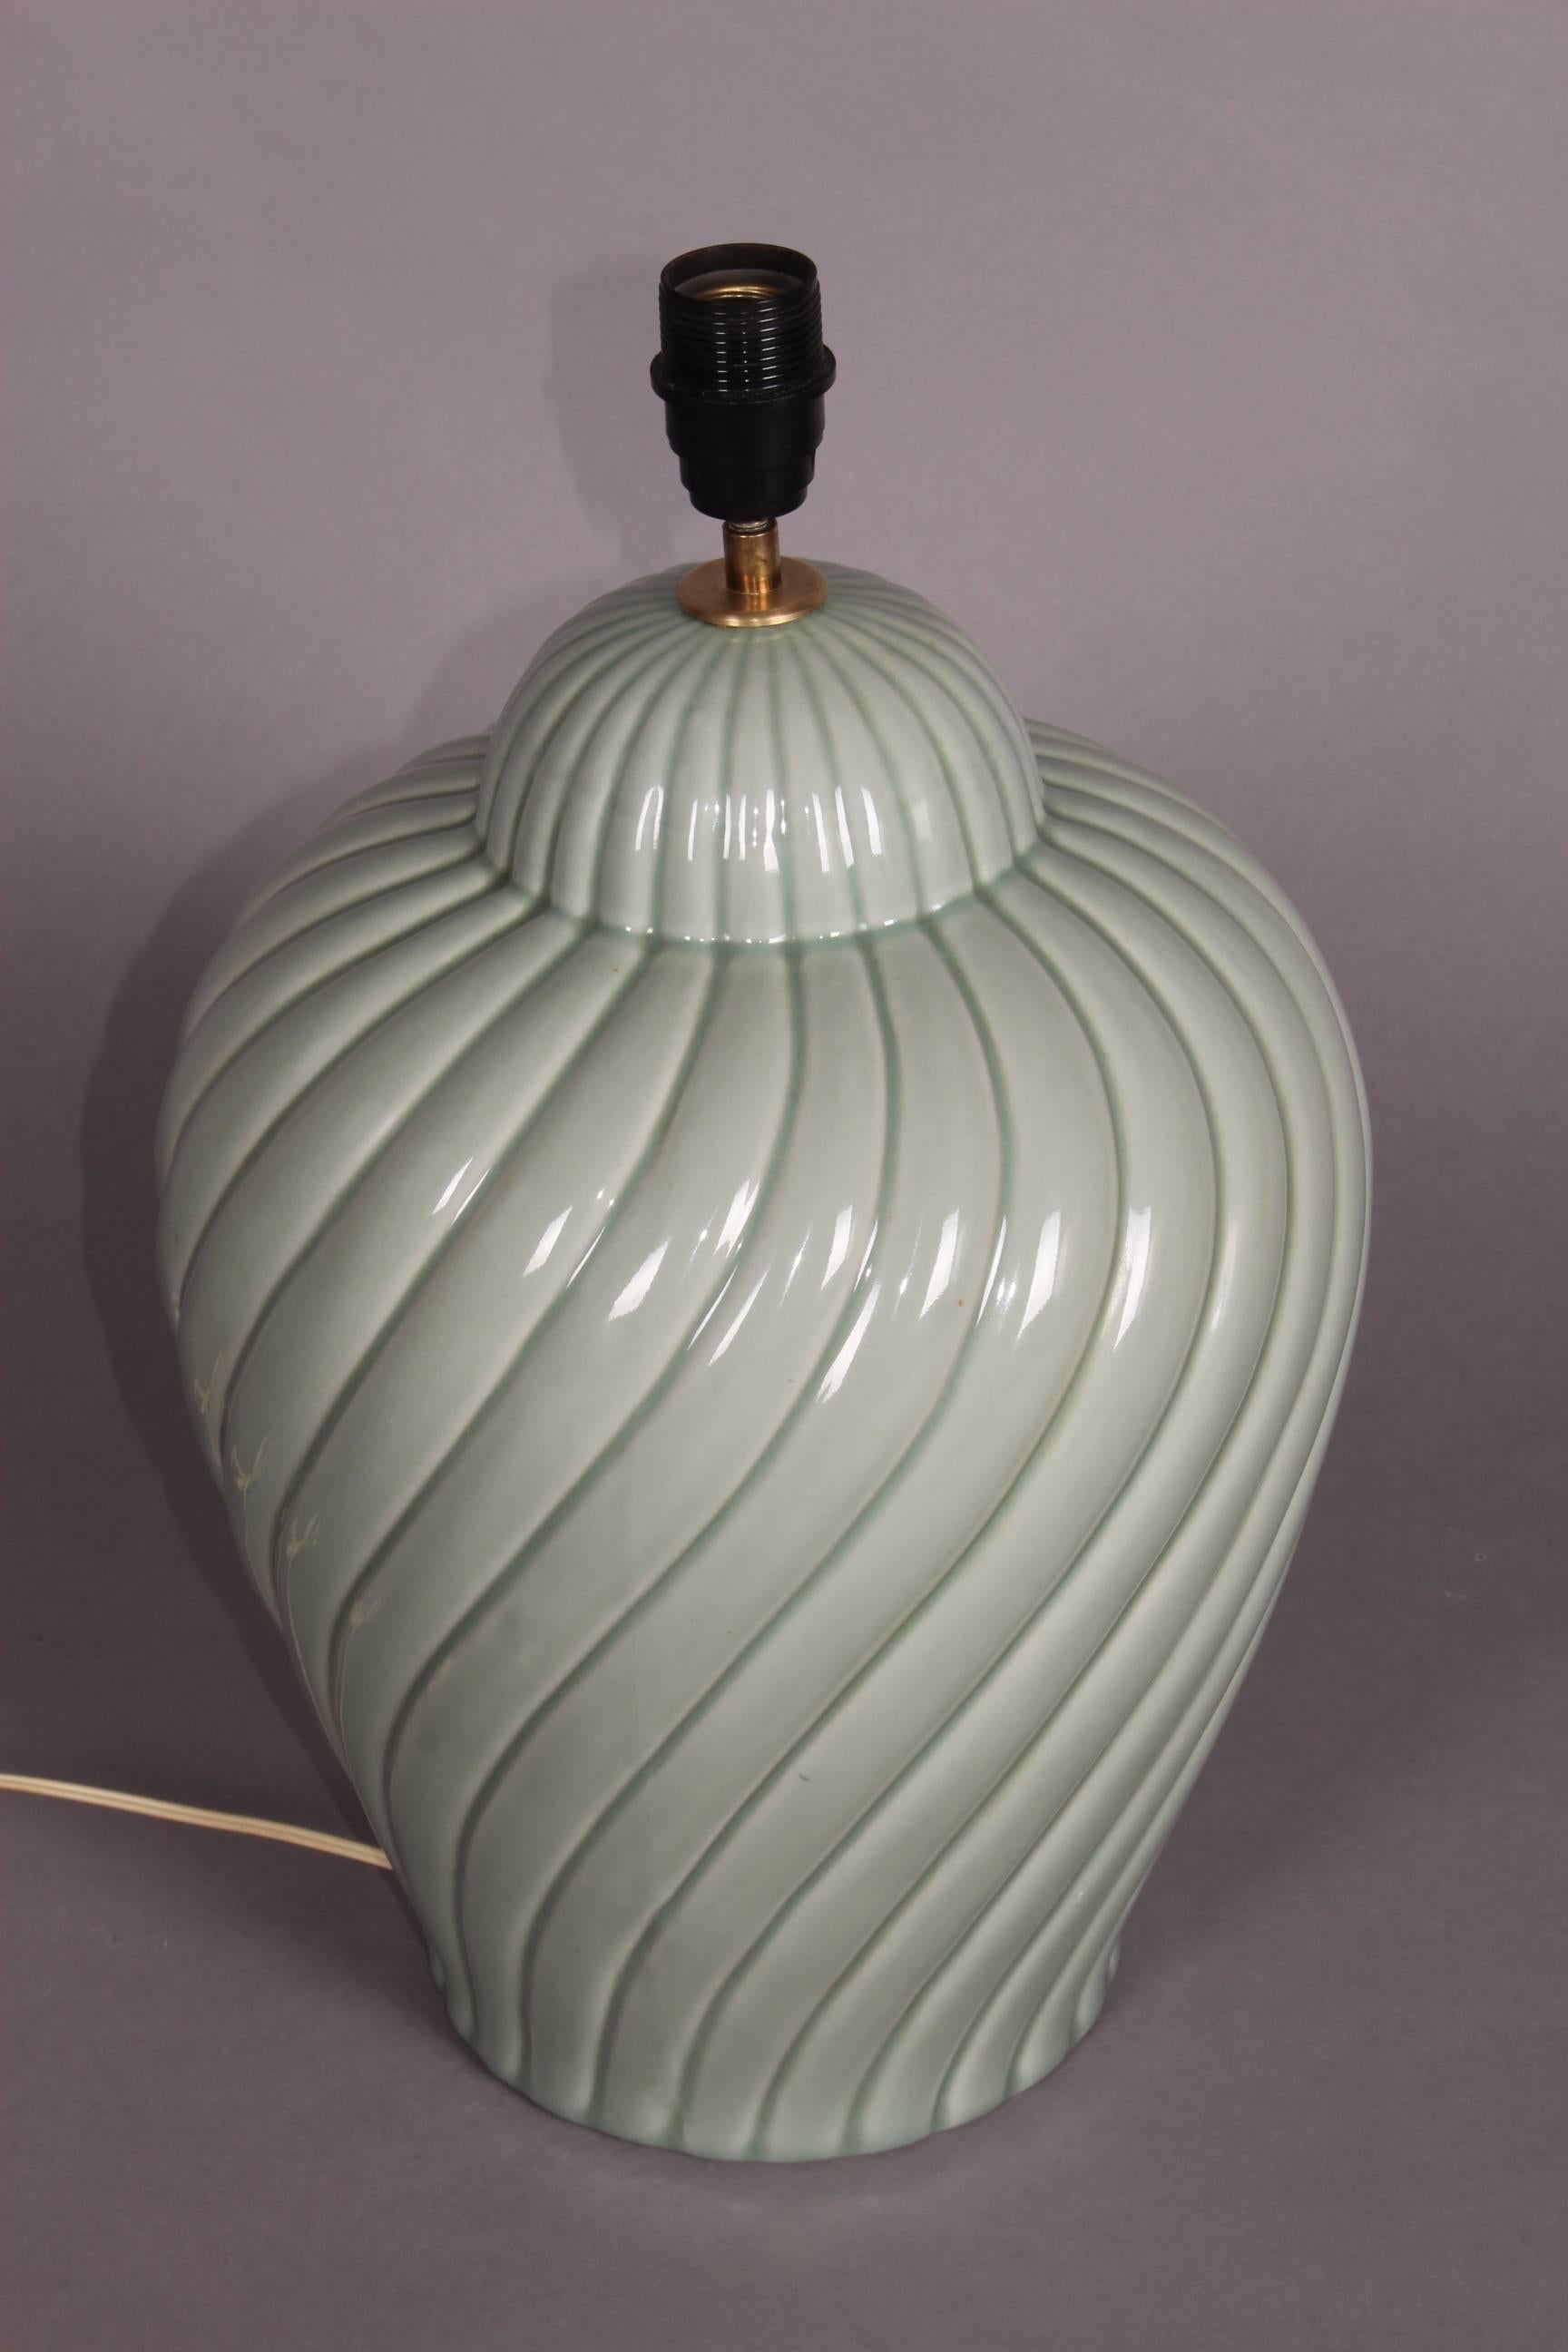 Ceramic table lamp.